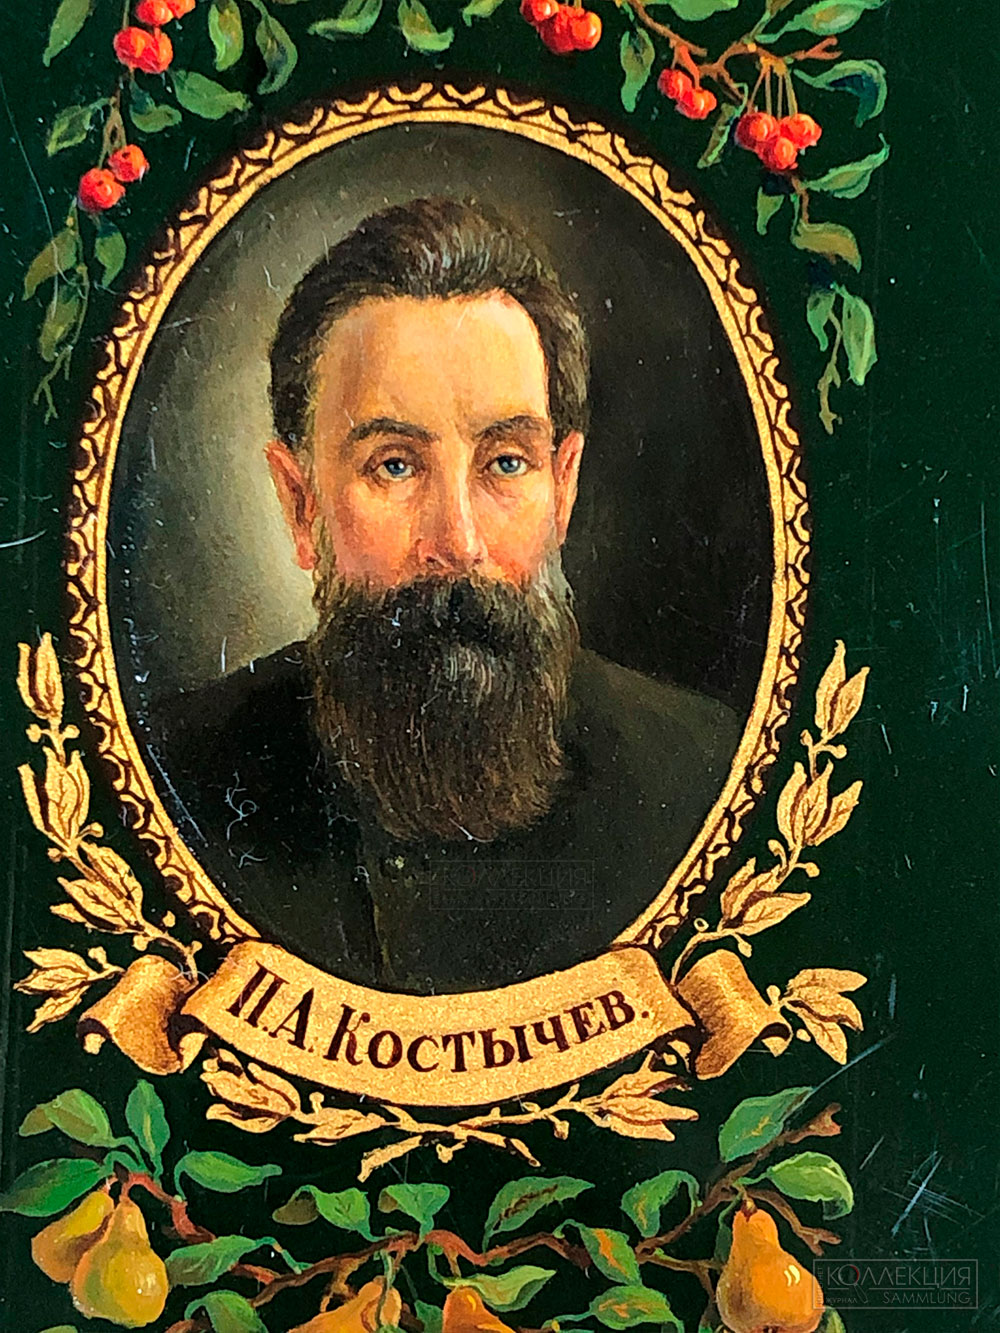 П.А. Костычев (1845—1895)